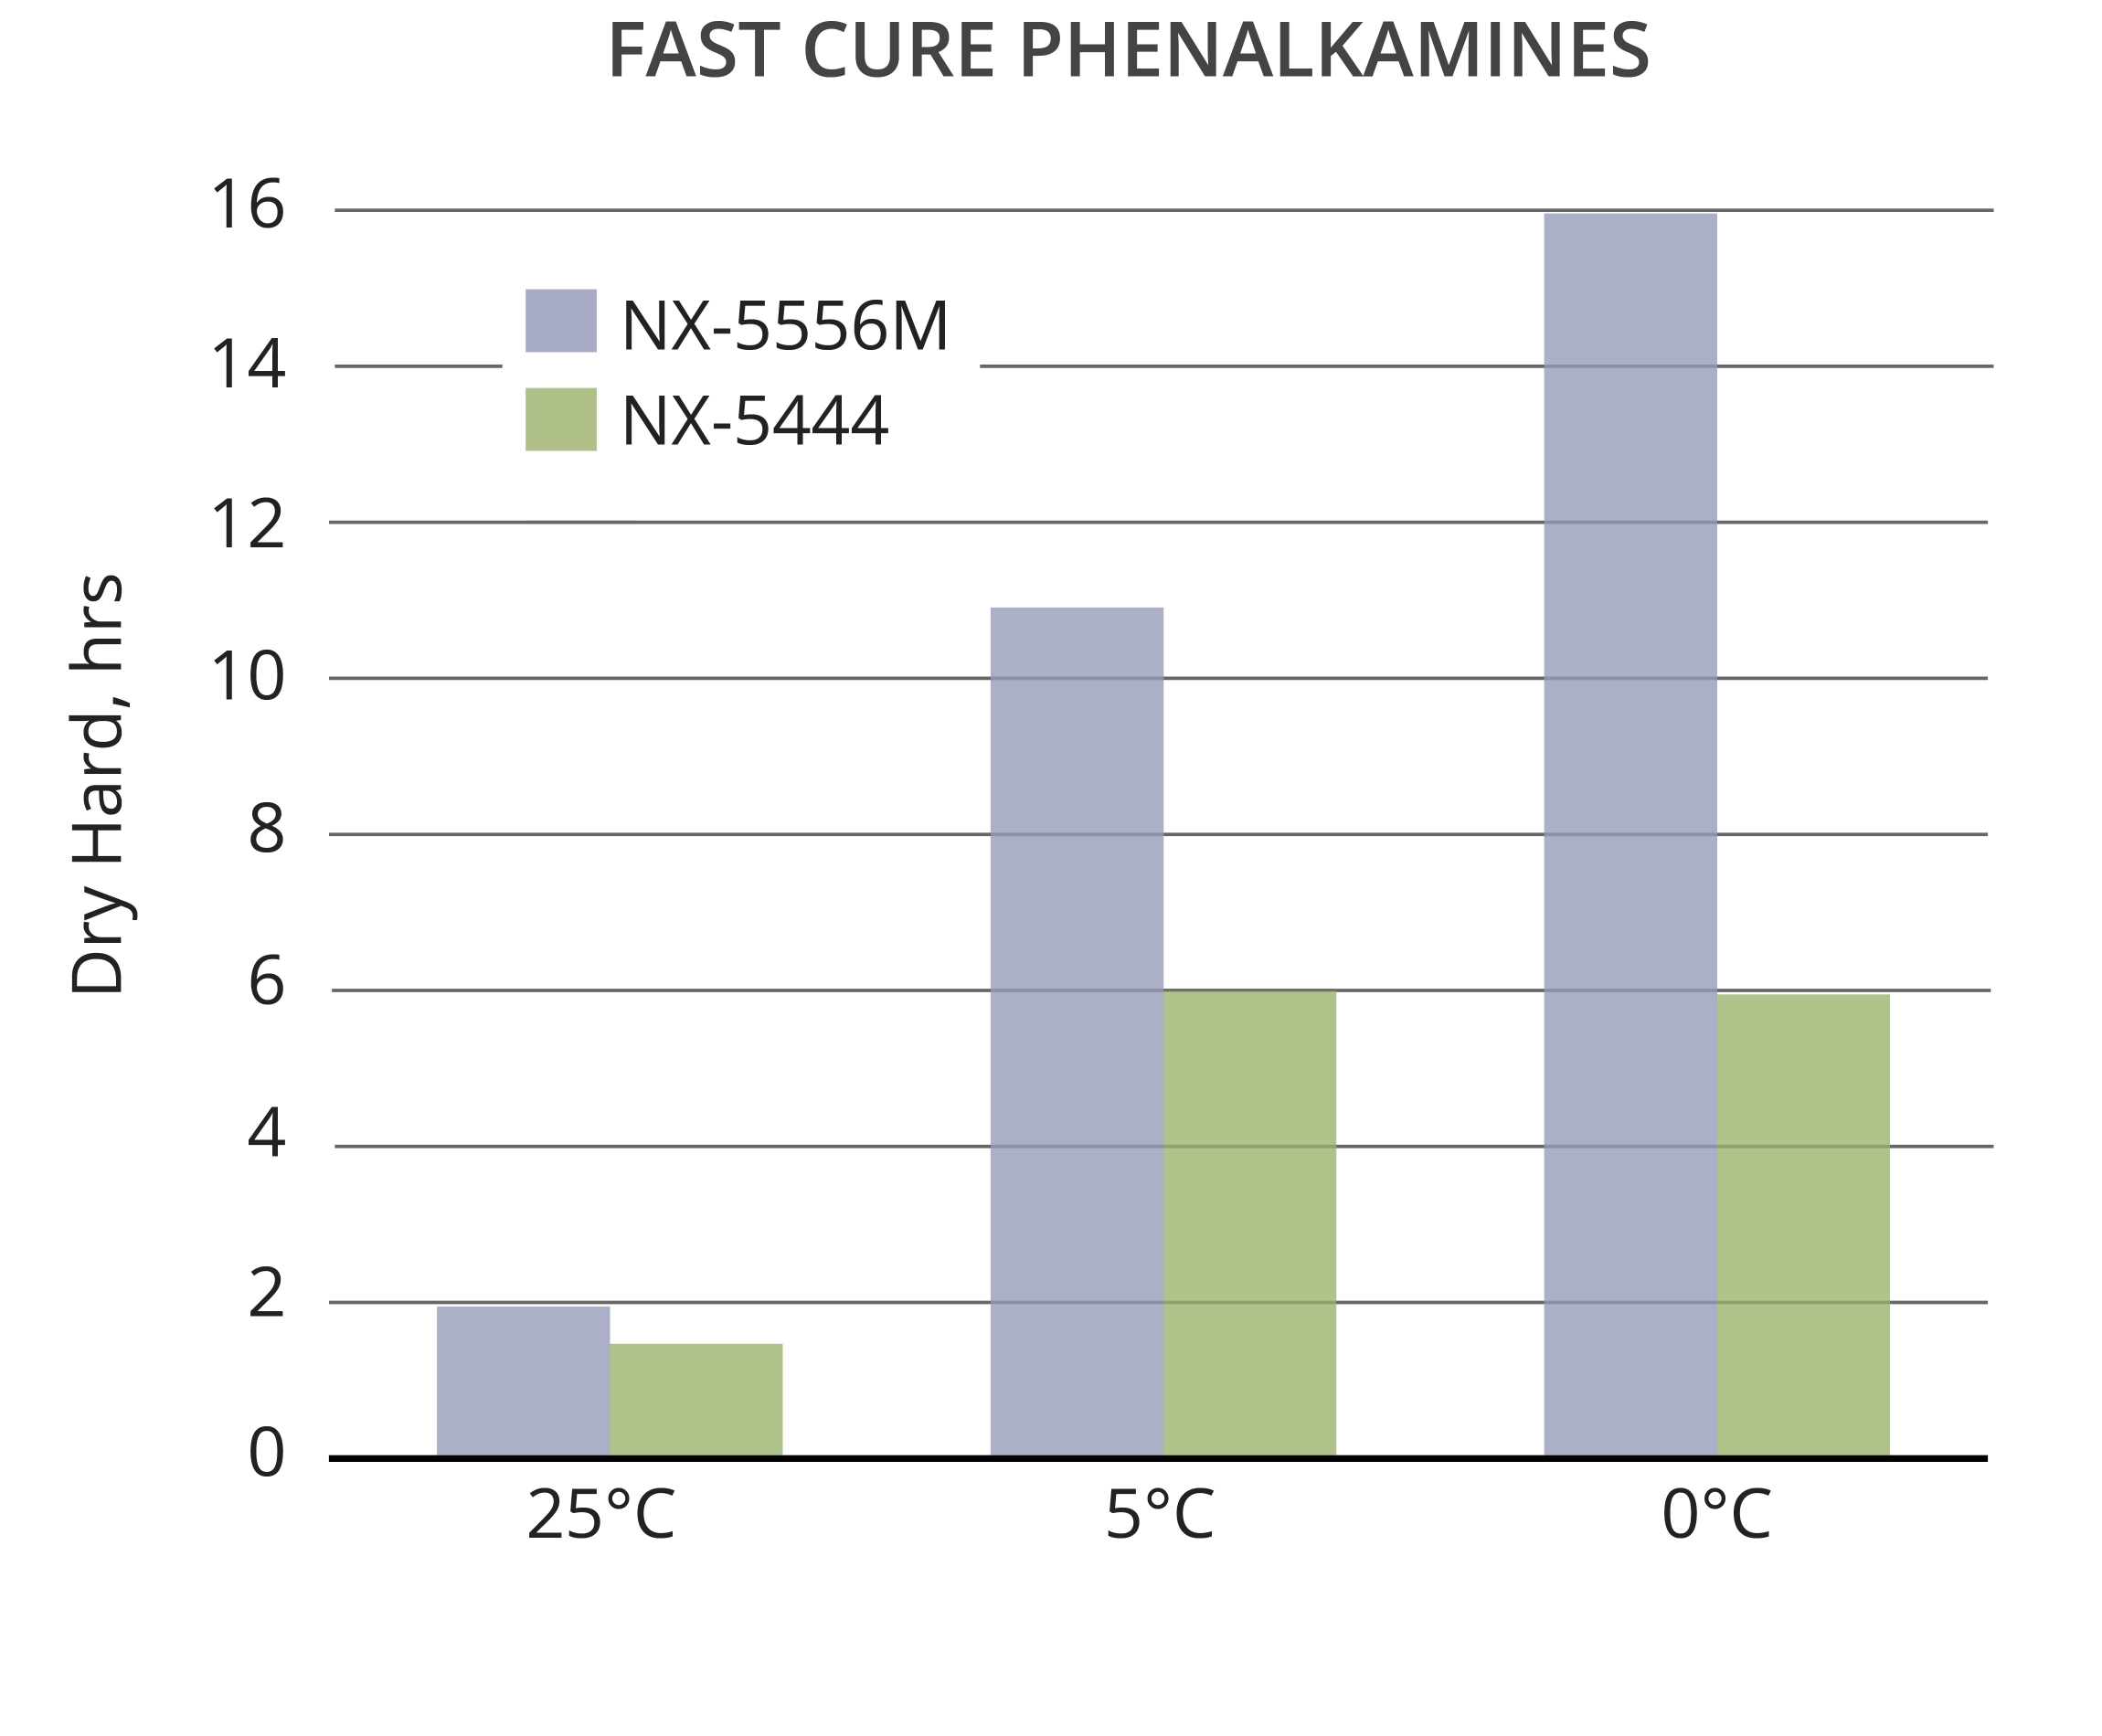 Cardolite low VOC phenalkamines show fast low temperature cure